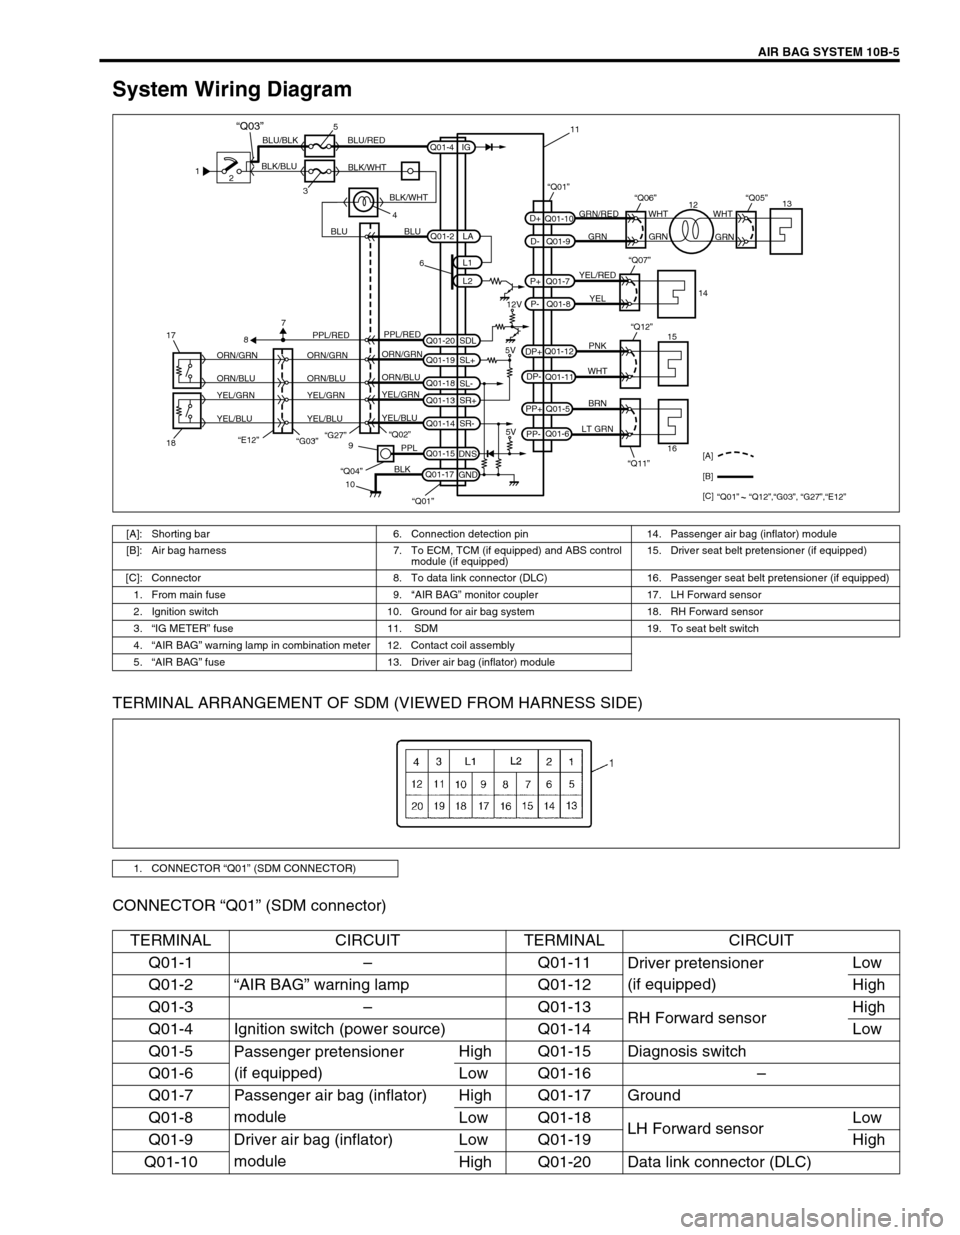 SUZUKI GRAND VITARA 2001 2.G Manual PDF AIR BAG SYSTEM 10B-5
System Wiring Diagram
TERMINAL ARRANGEMENT OF SDM (VIEWED FROM HARNESS SIDE)
CONNECTOR “Q01” (SDM connector)
1
2
35
4 BLK/BLUBLU/BLK BLU/RED
BLK/WHT
BLU BLUGRN/RED
GRN GRNWHT 